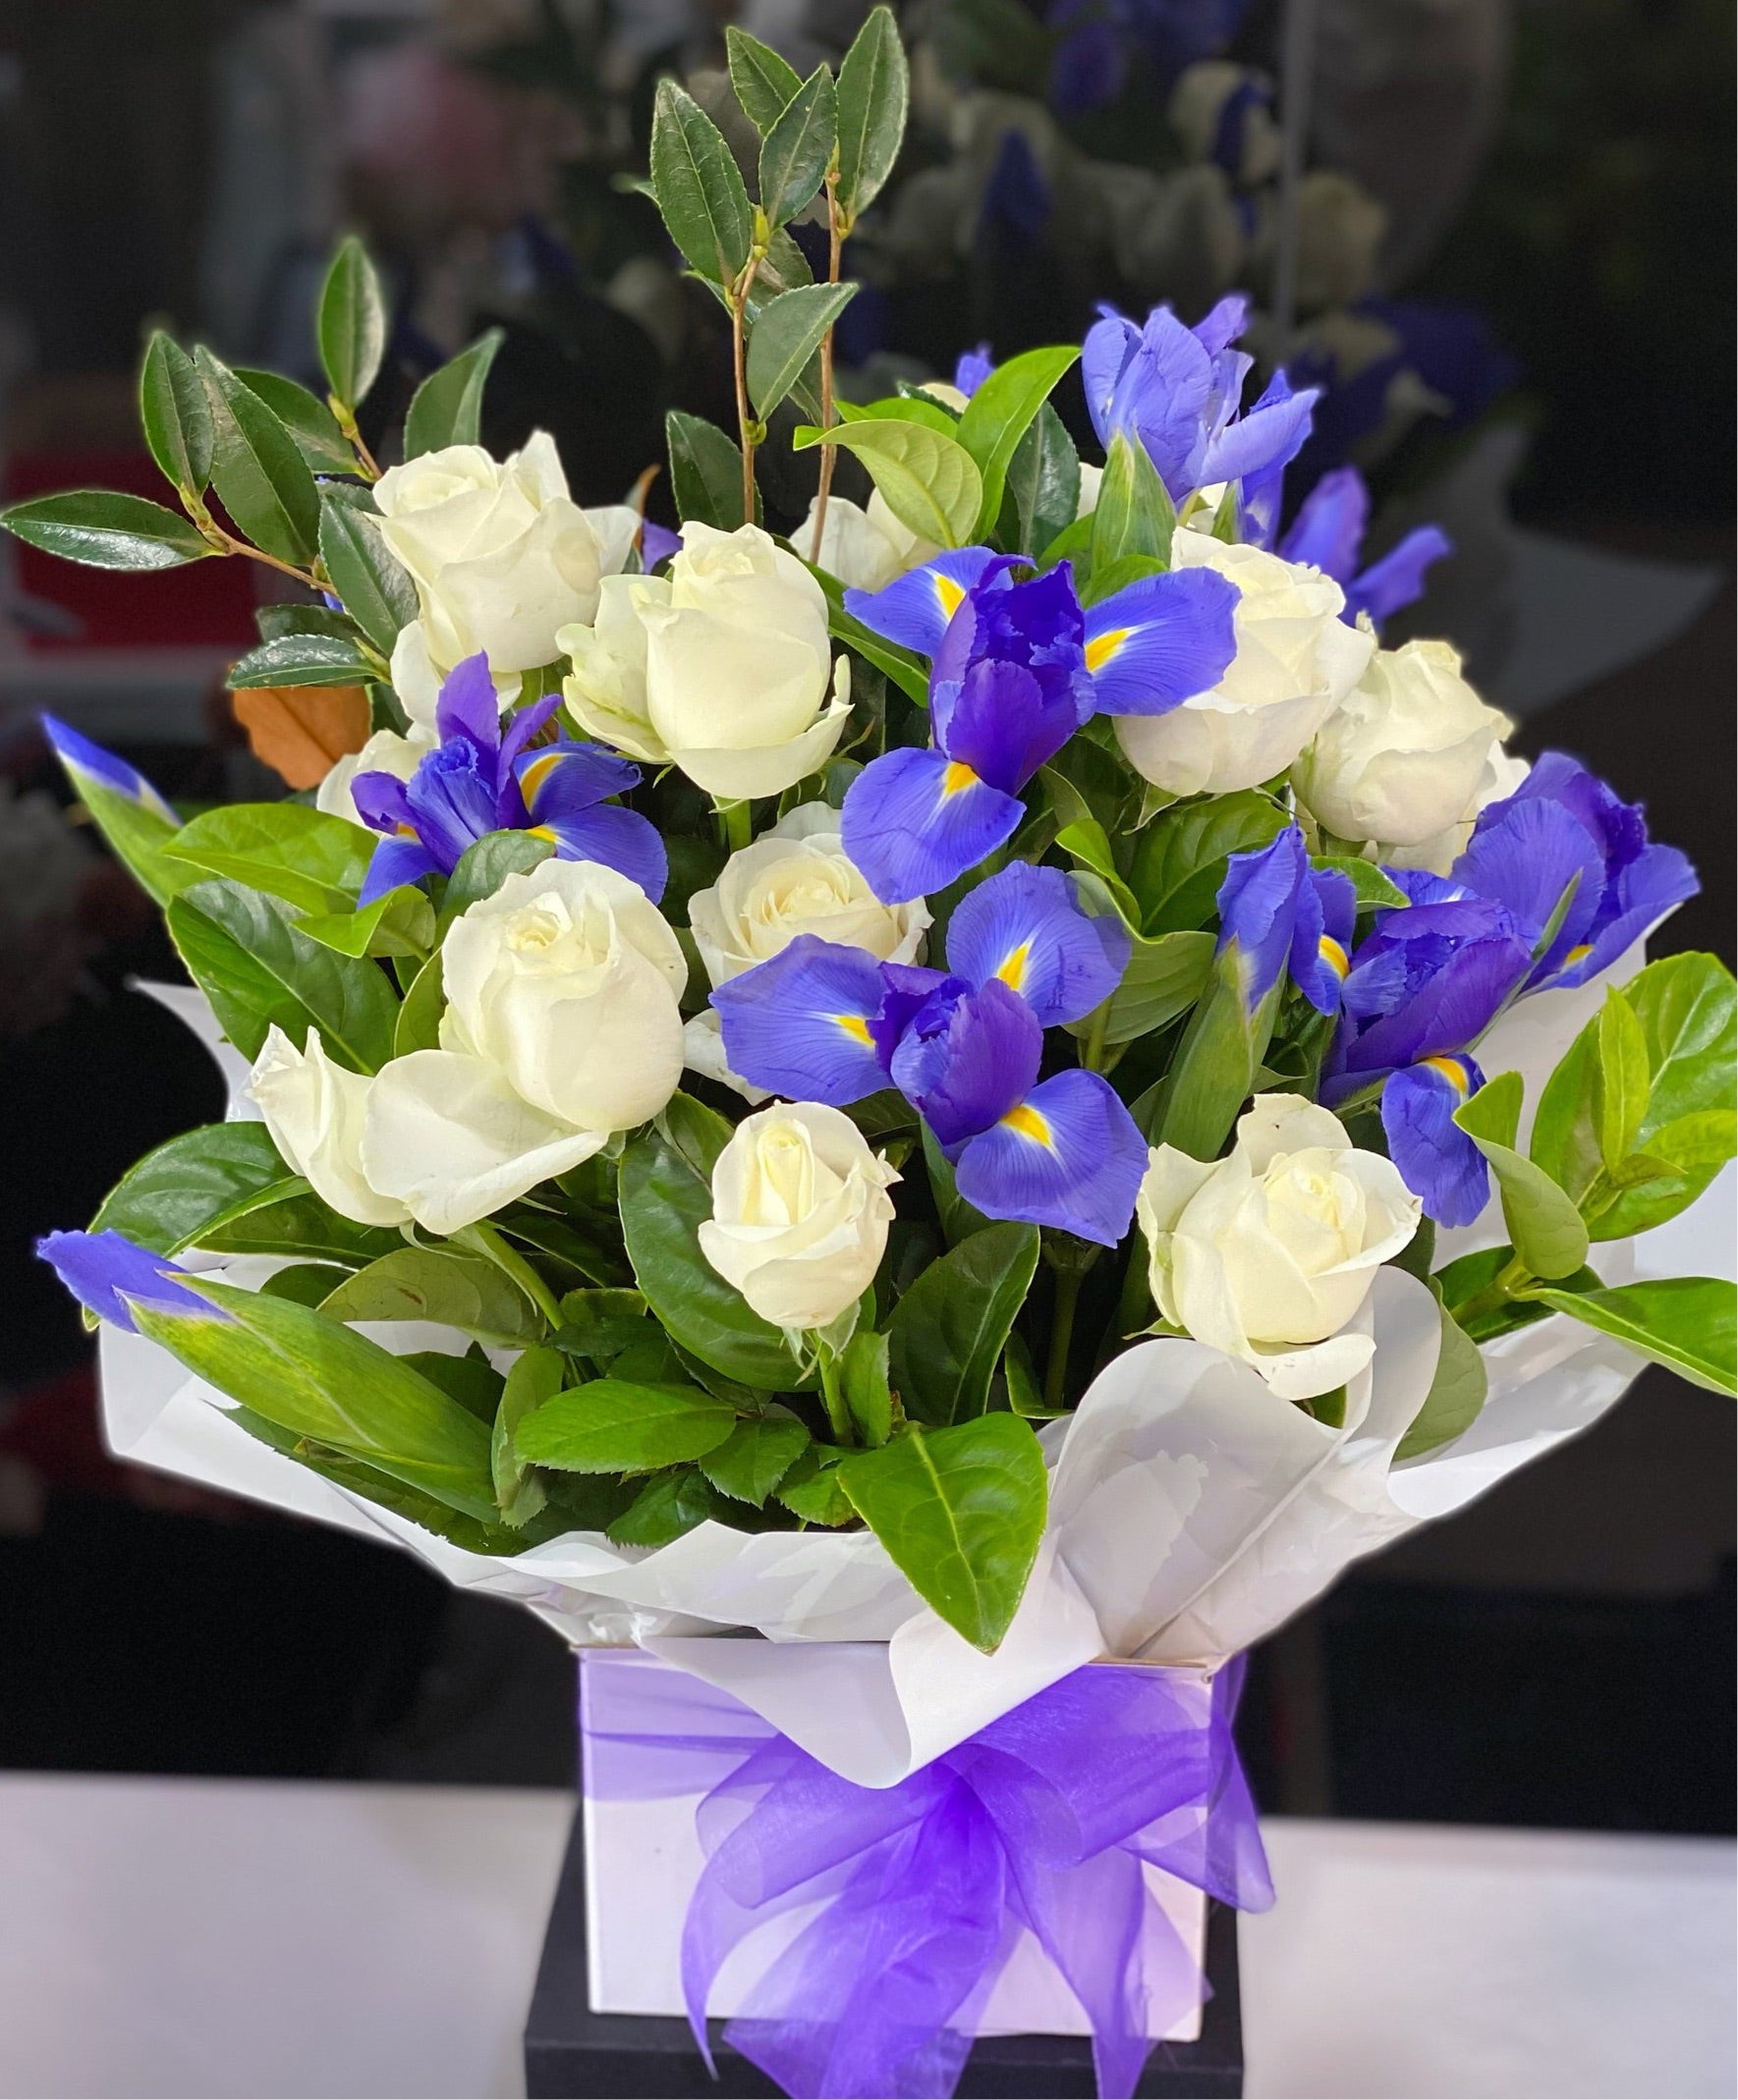 Elegancy (white rose and blue iris box) - Vermont Florist